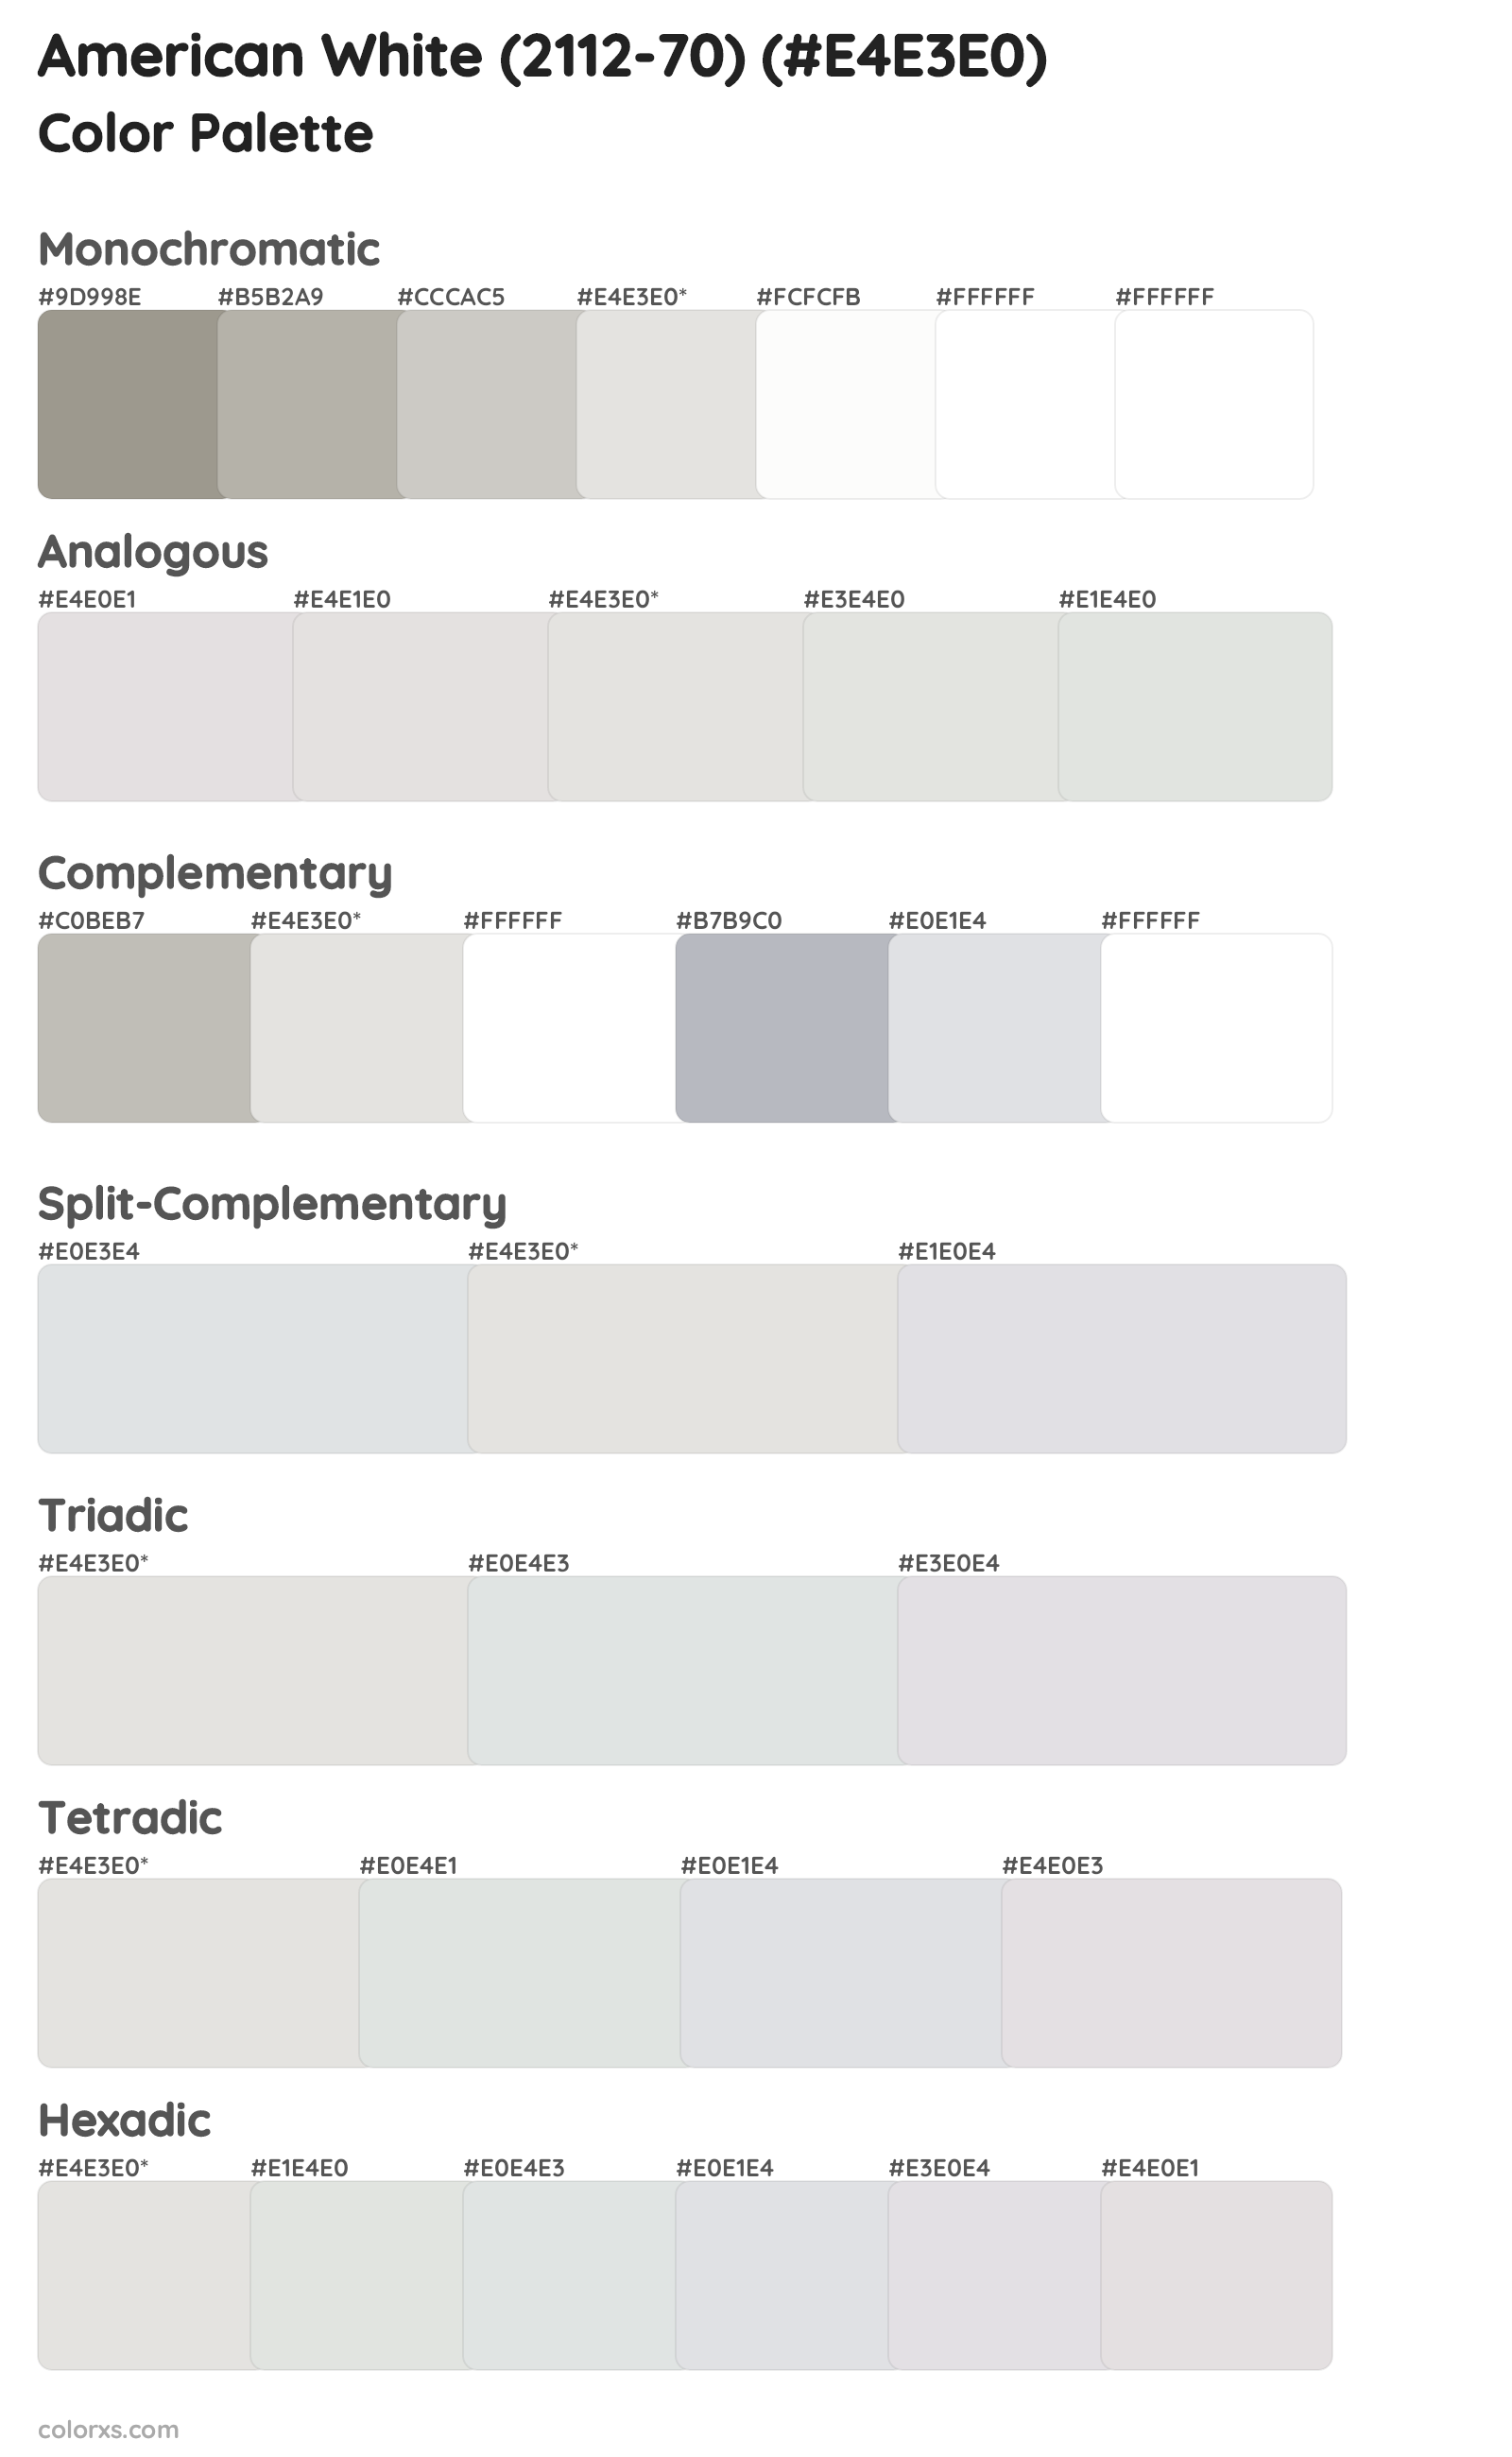 American White (2112-70) Color Scheme Palettes